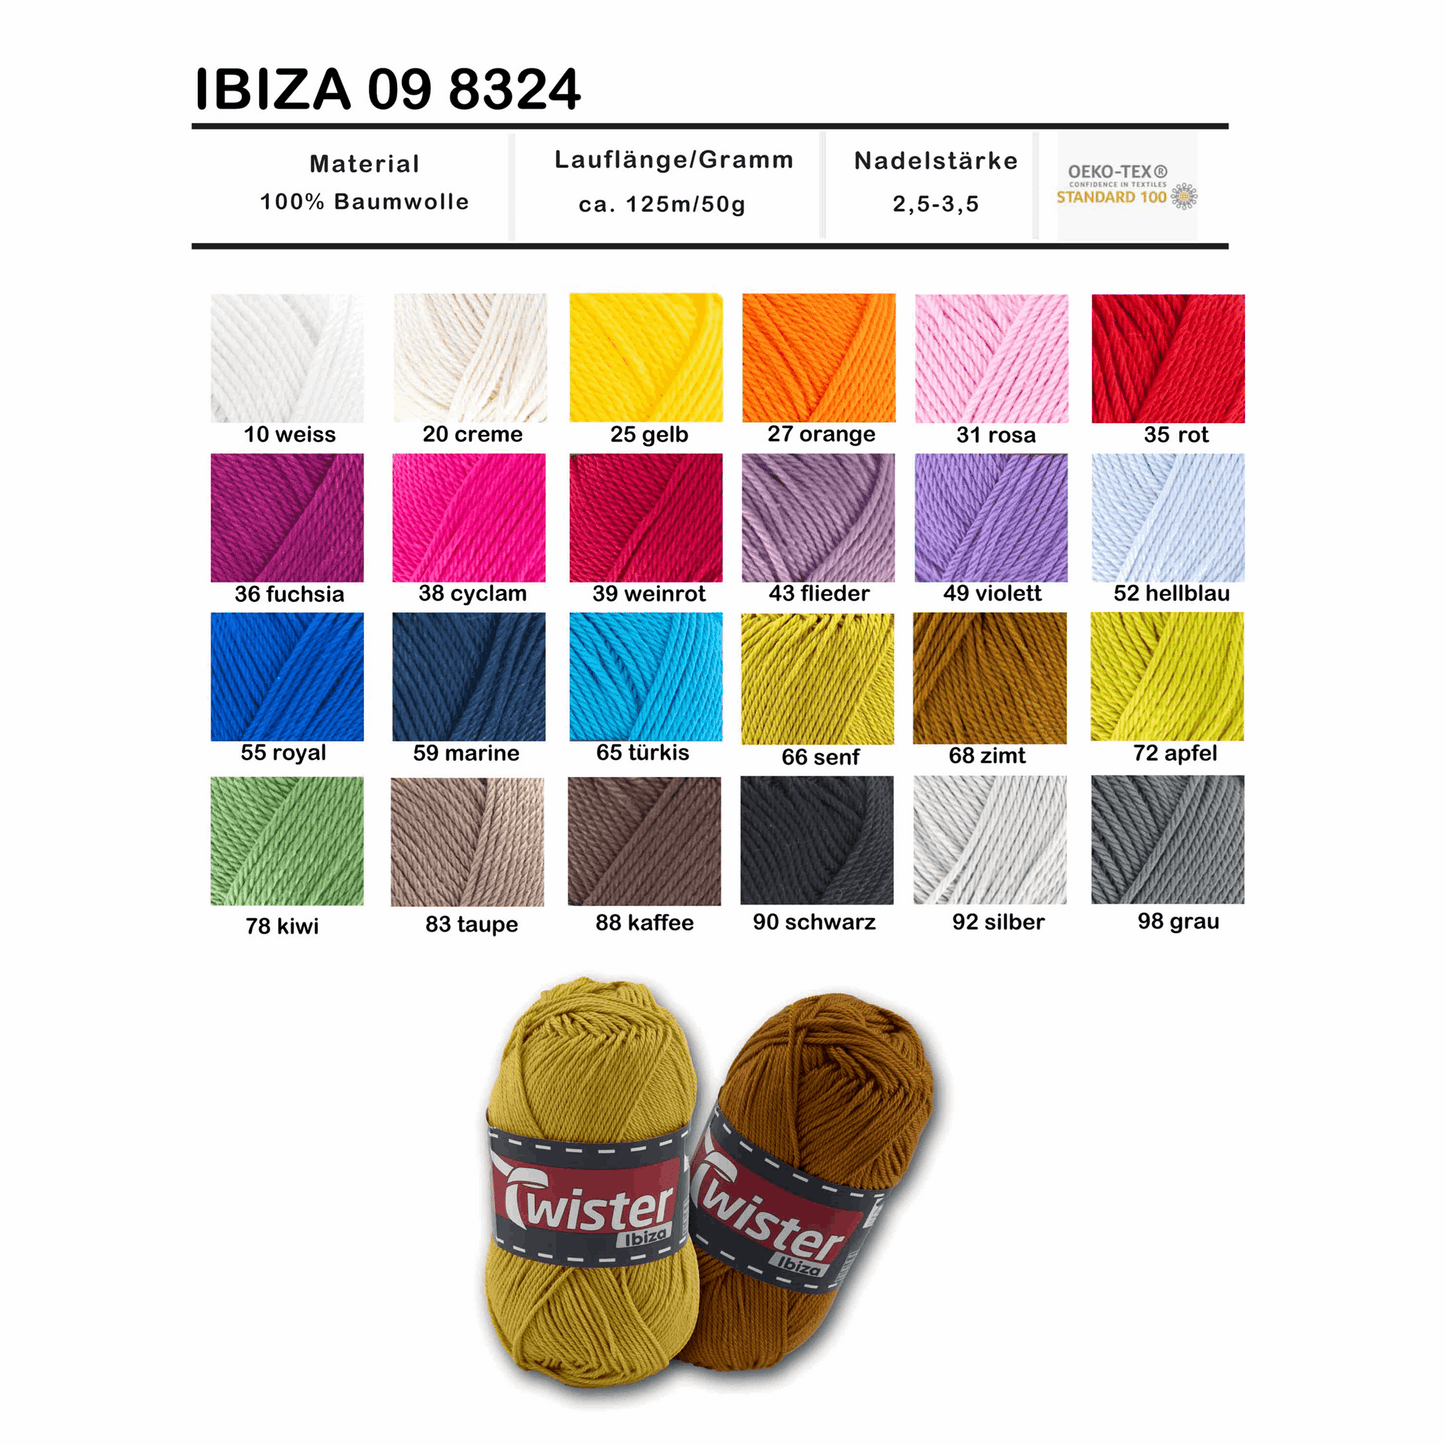 Twister Ibiza, 50g, 98324, Farbe gelb 25